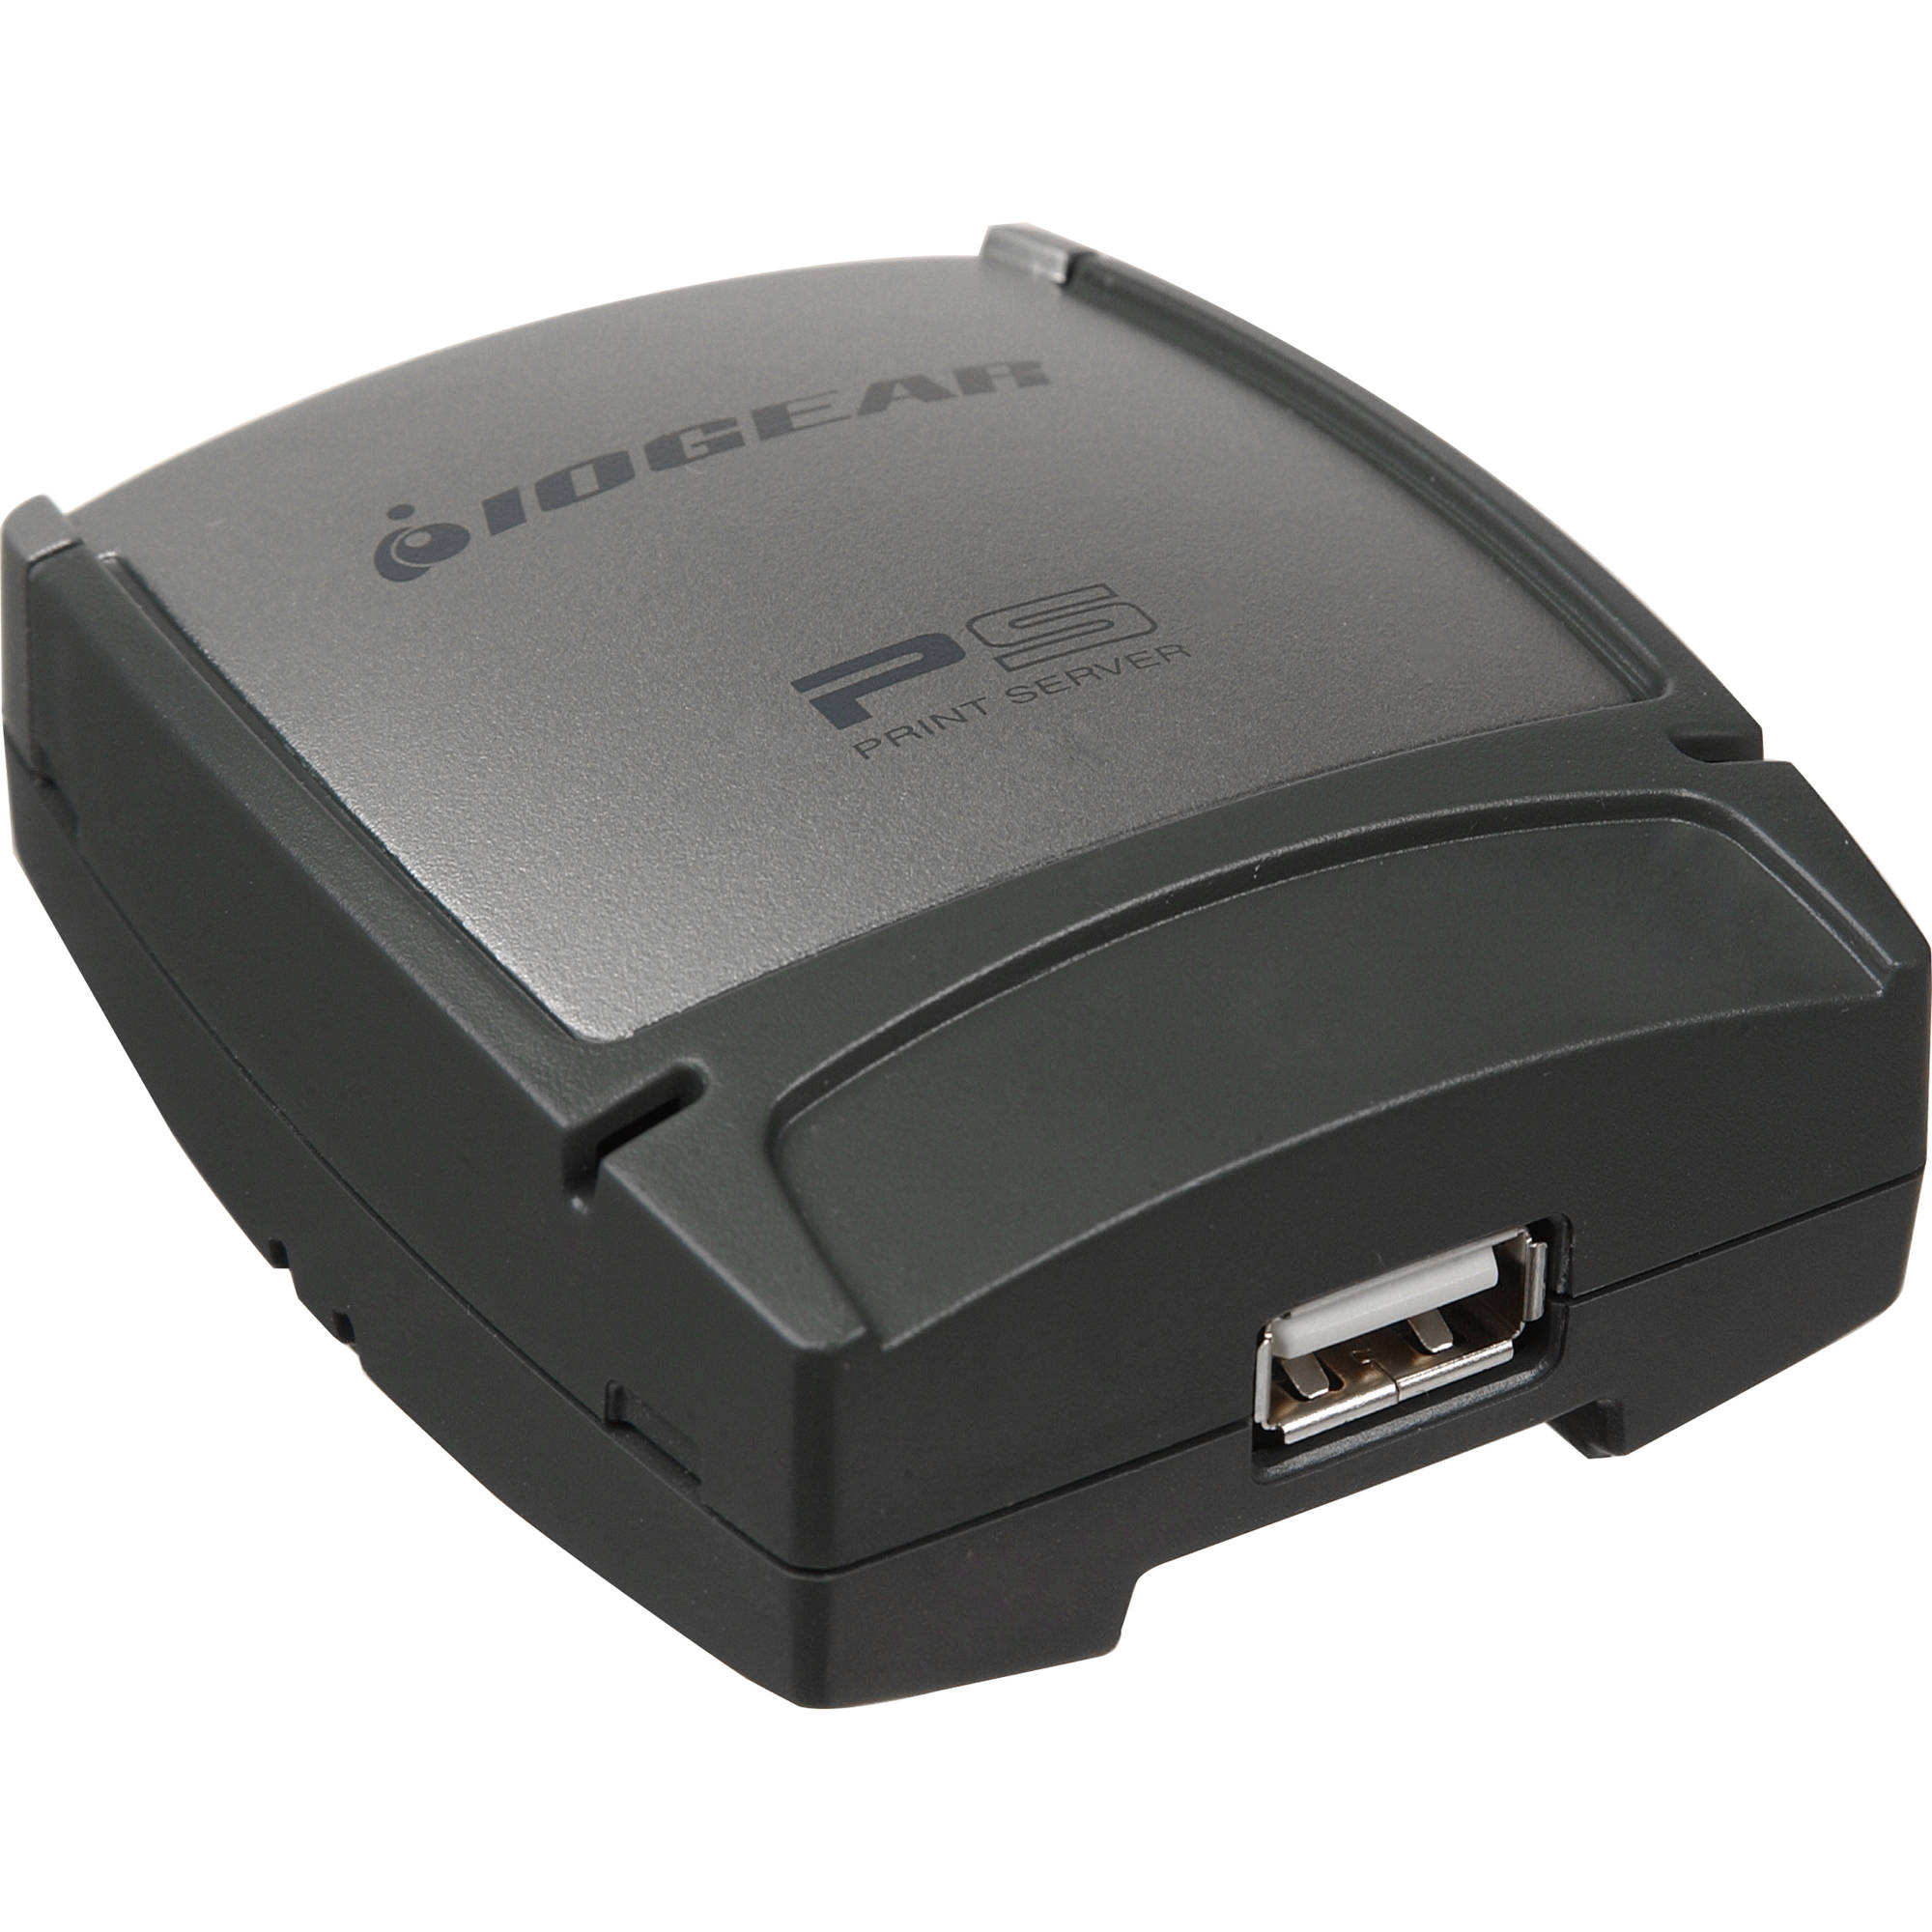 Single port. Принтсервер для принтера с USB. Принт сервер USB. Принт сервер для USB принтера. USB принтер to Wi-Fi.